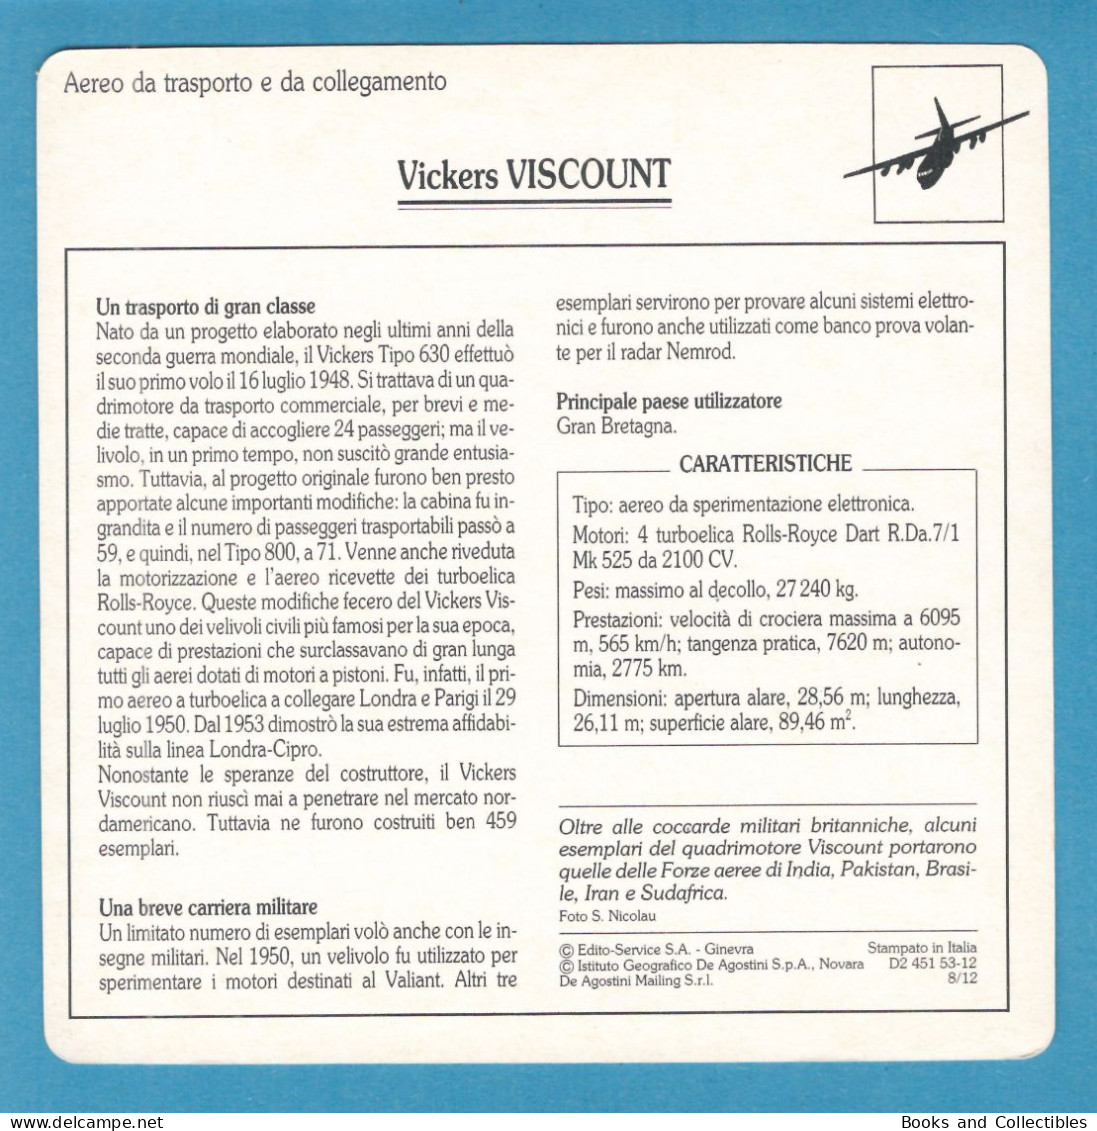 DeAgostini Educational Sheet "Warplanes" / Vickers VISCOUNT (Great Britain) - Aviation